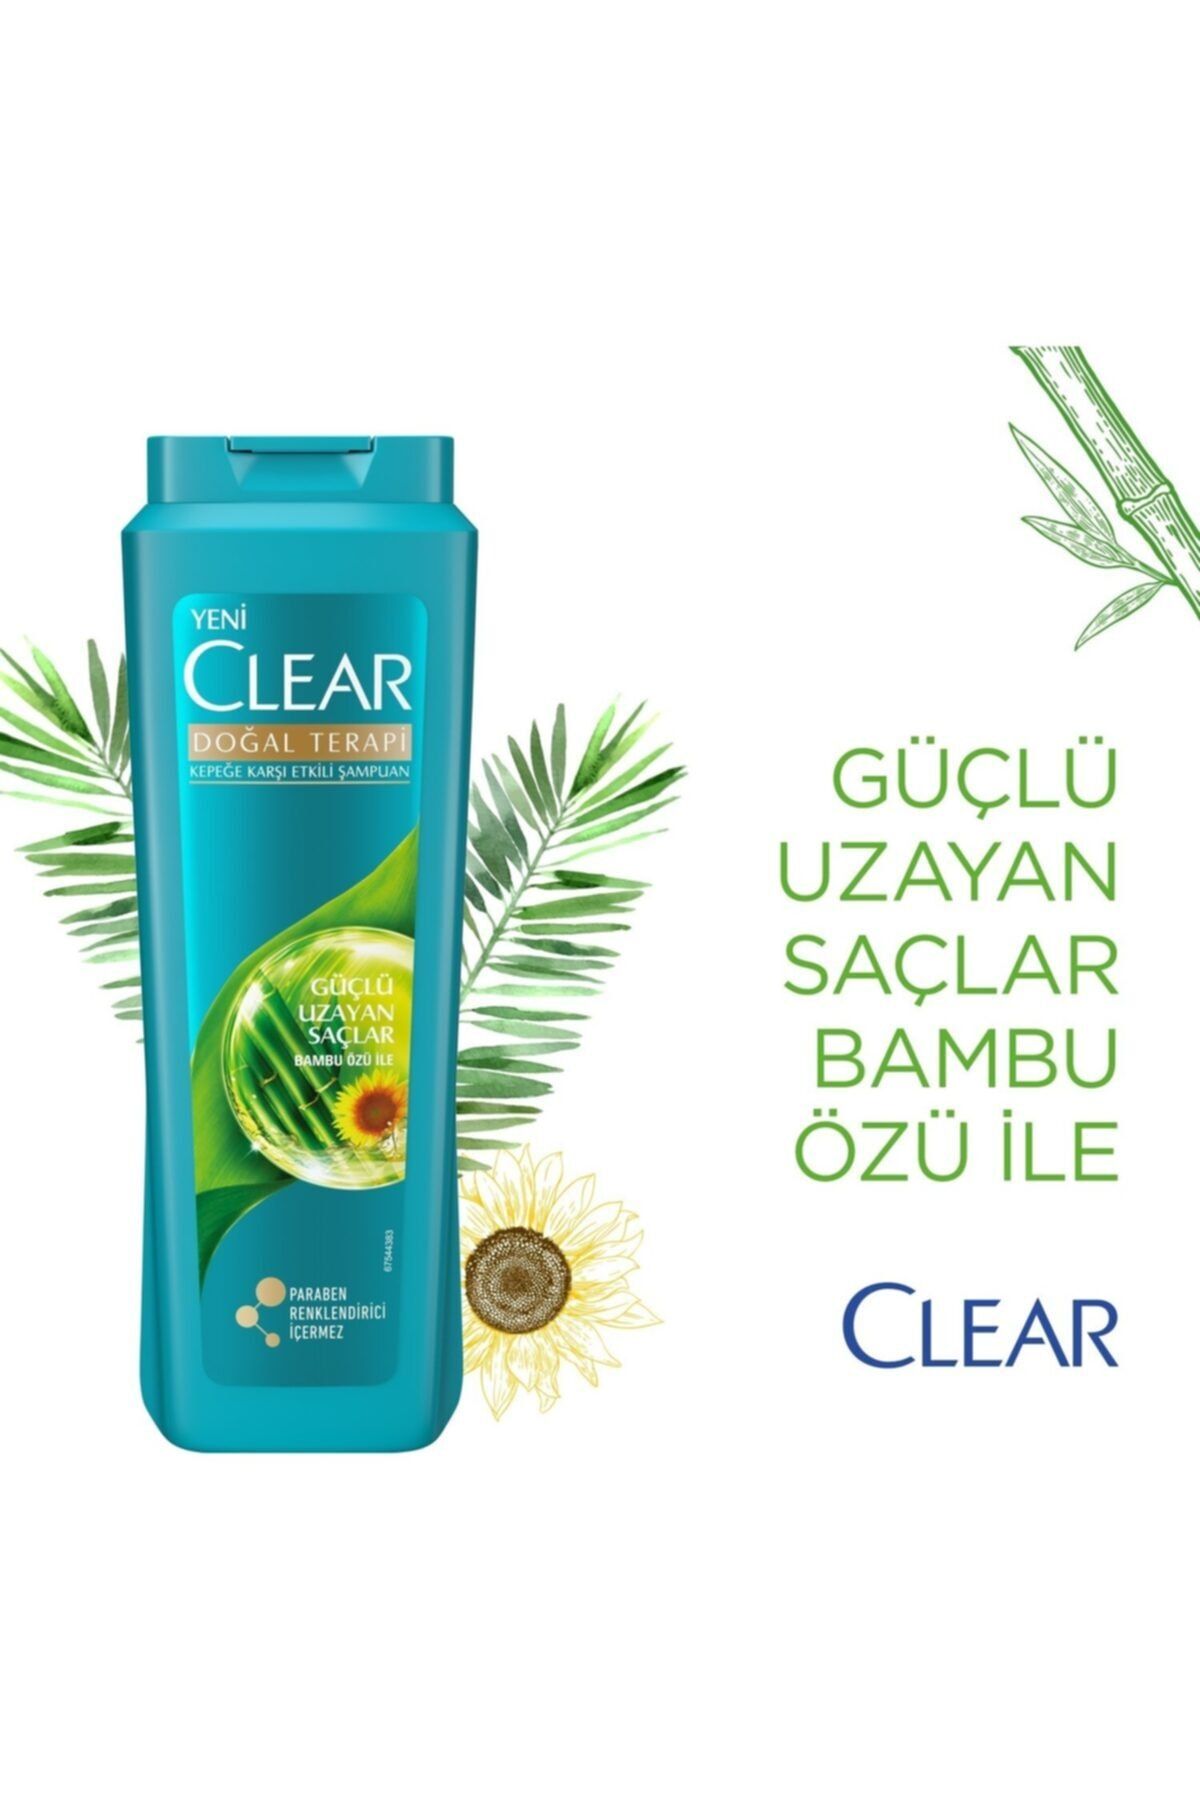 Clean & Clear Clear Doğal Terapi Güçlü Uzayan Saçlar Bambu Özü Sampuan 180 ml